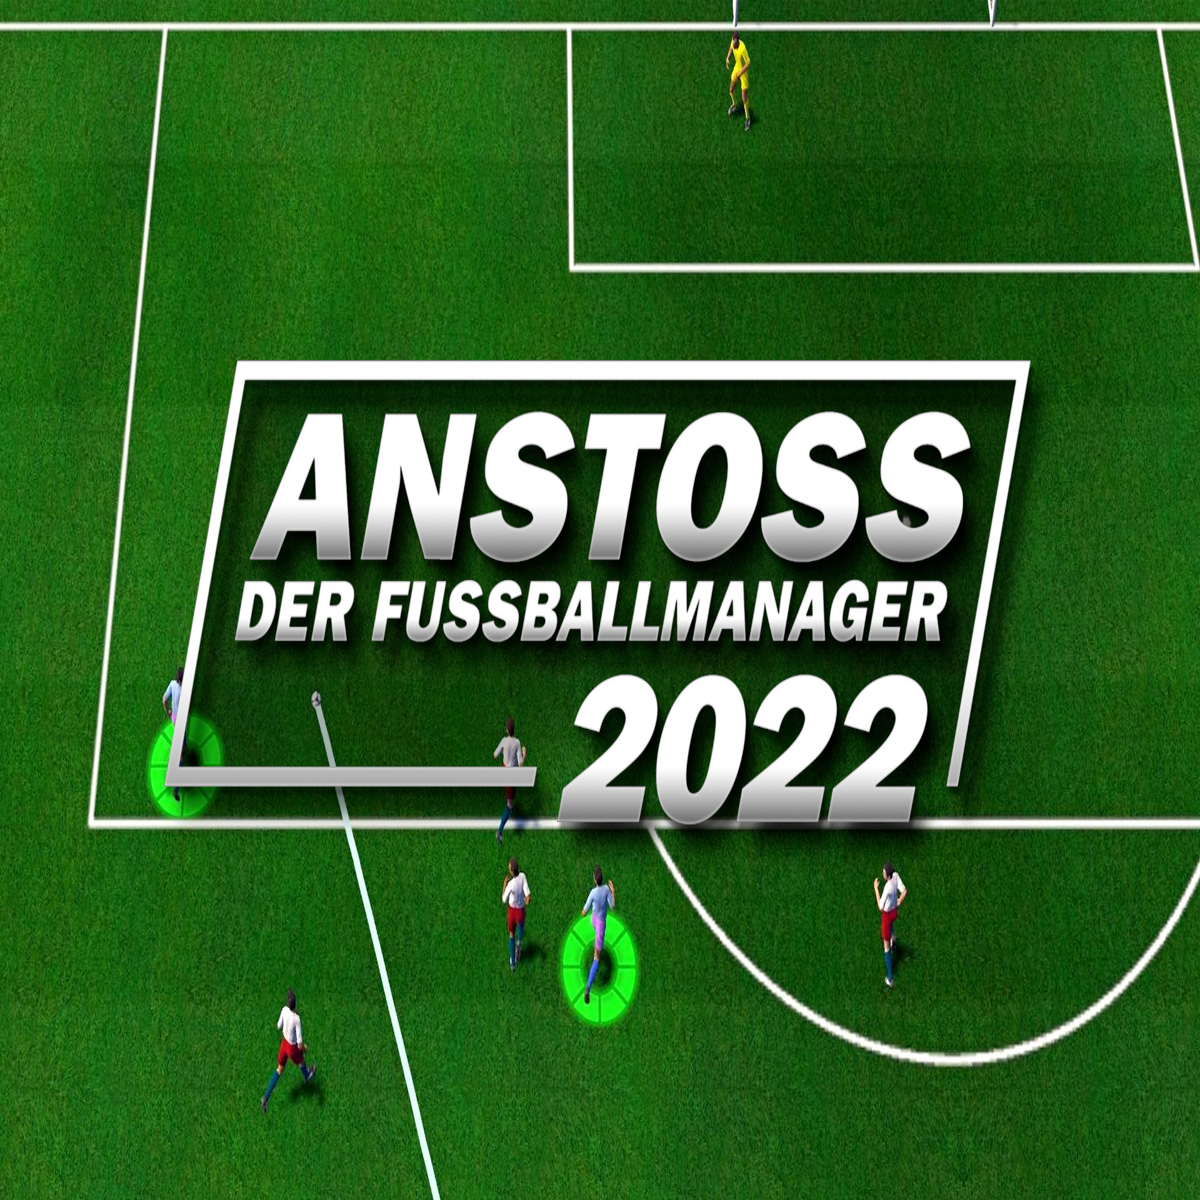 Anstoss 2022 heißt jetzt nur noch Anstoss - Der Fussballmanager